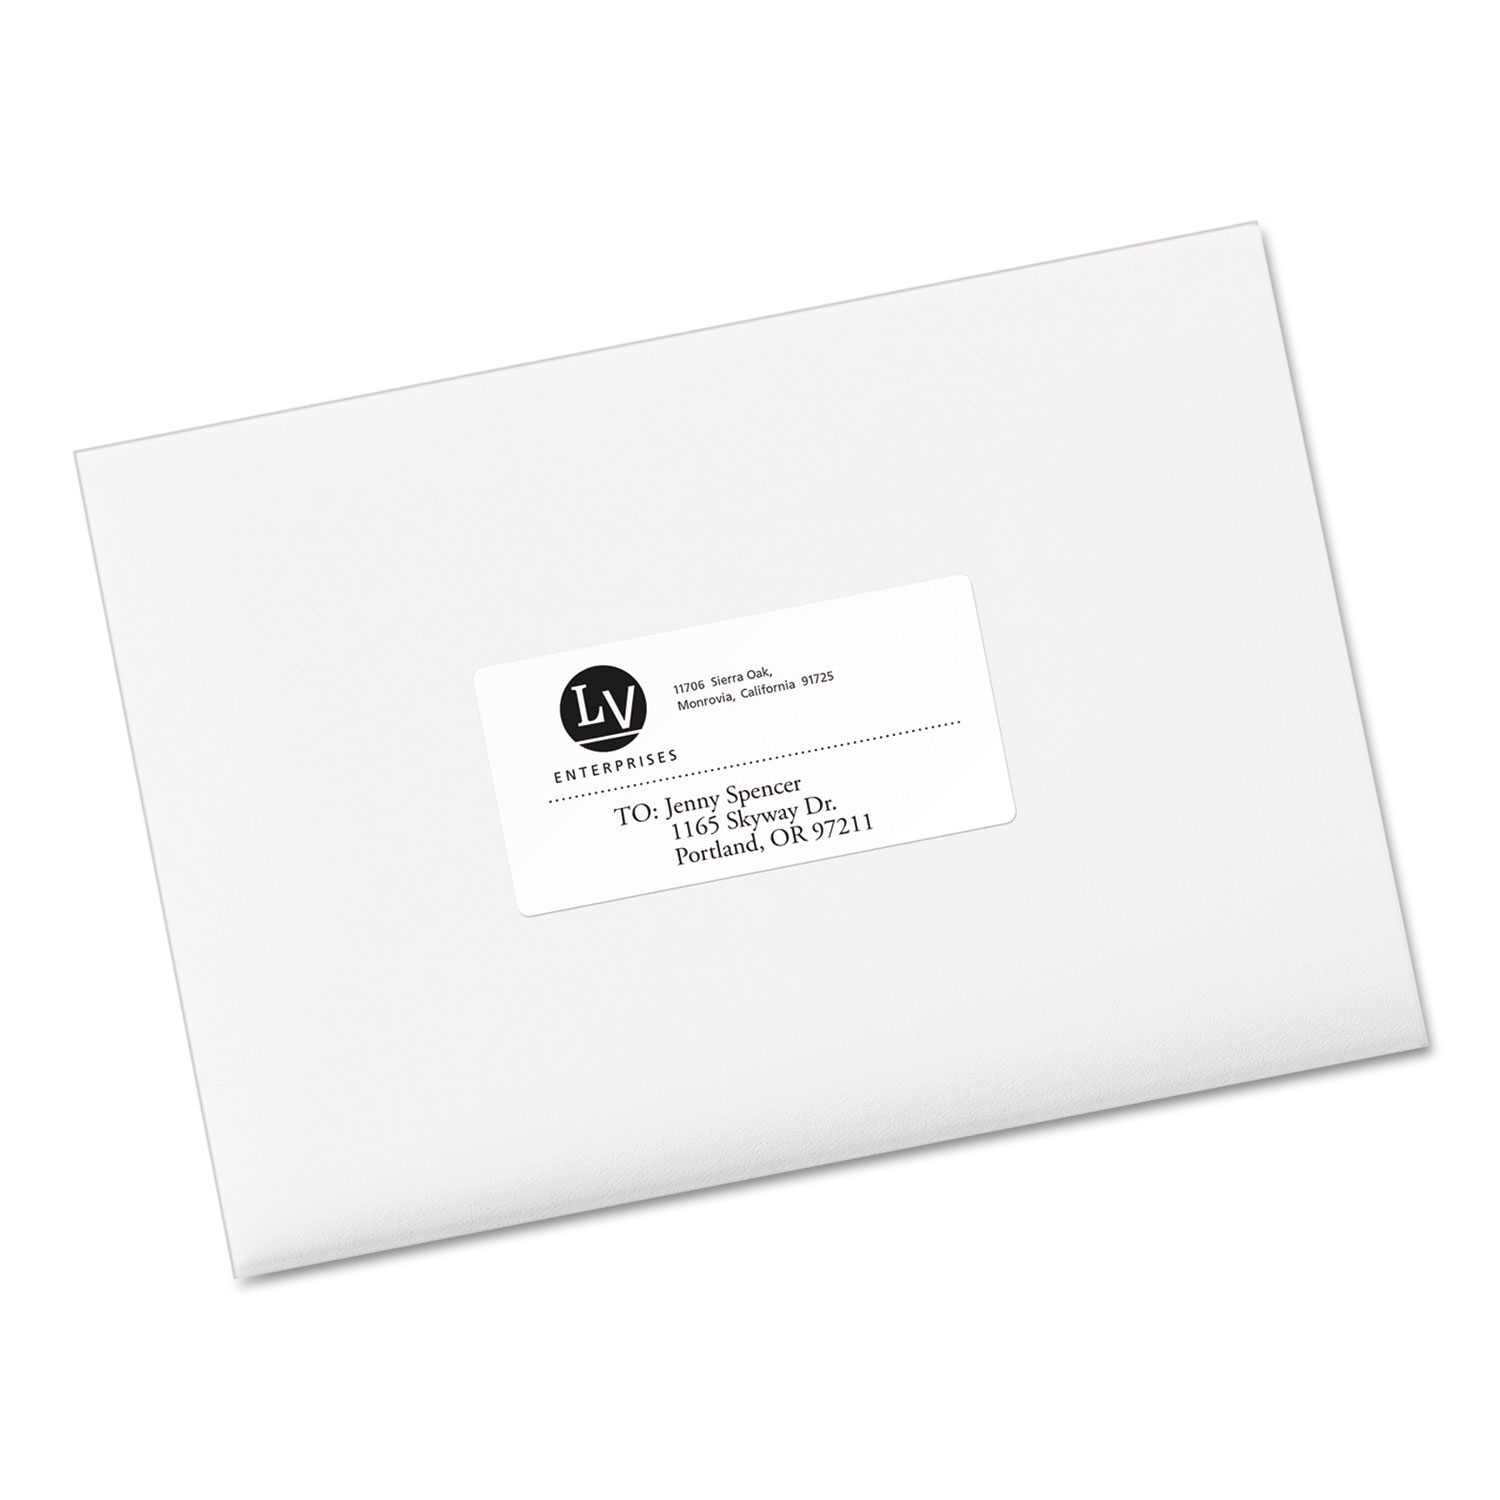 EcoFriendly Laser/Inkjet Shipping Labels, 2 x 4, White, 250/Pack